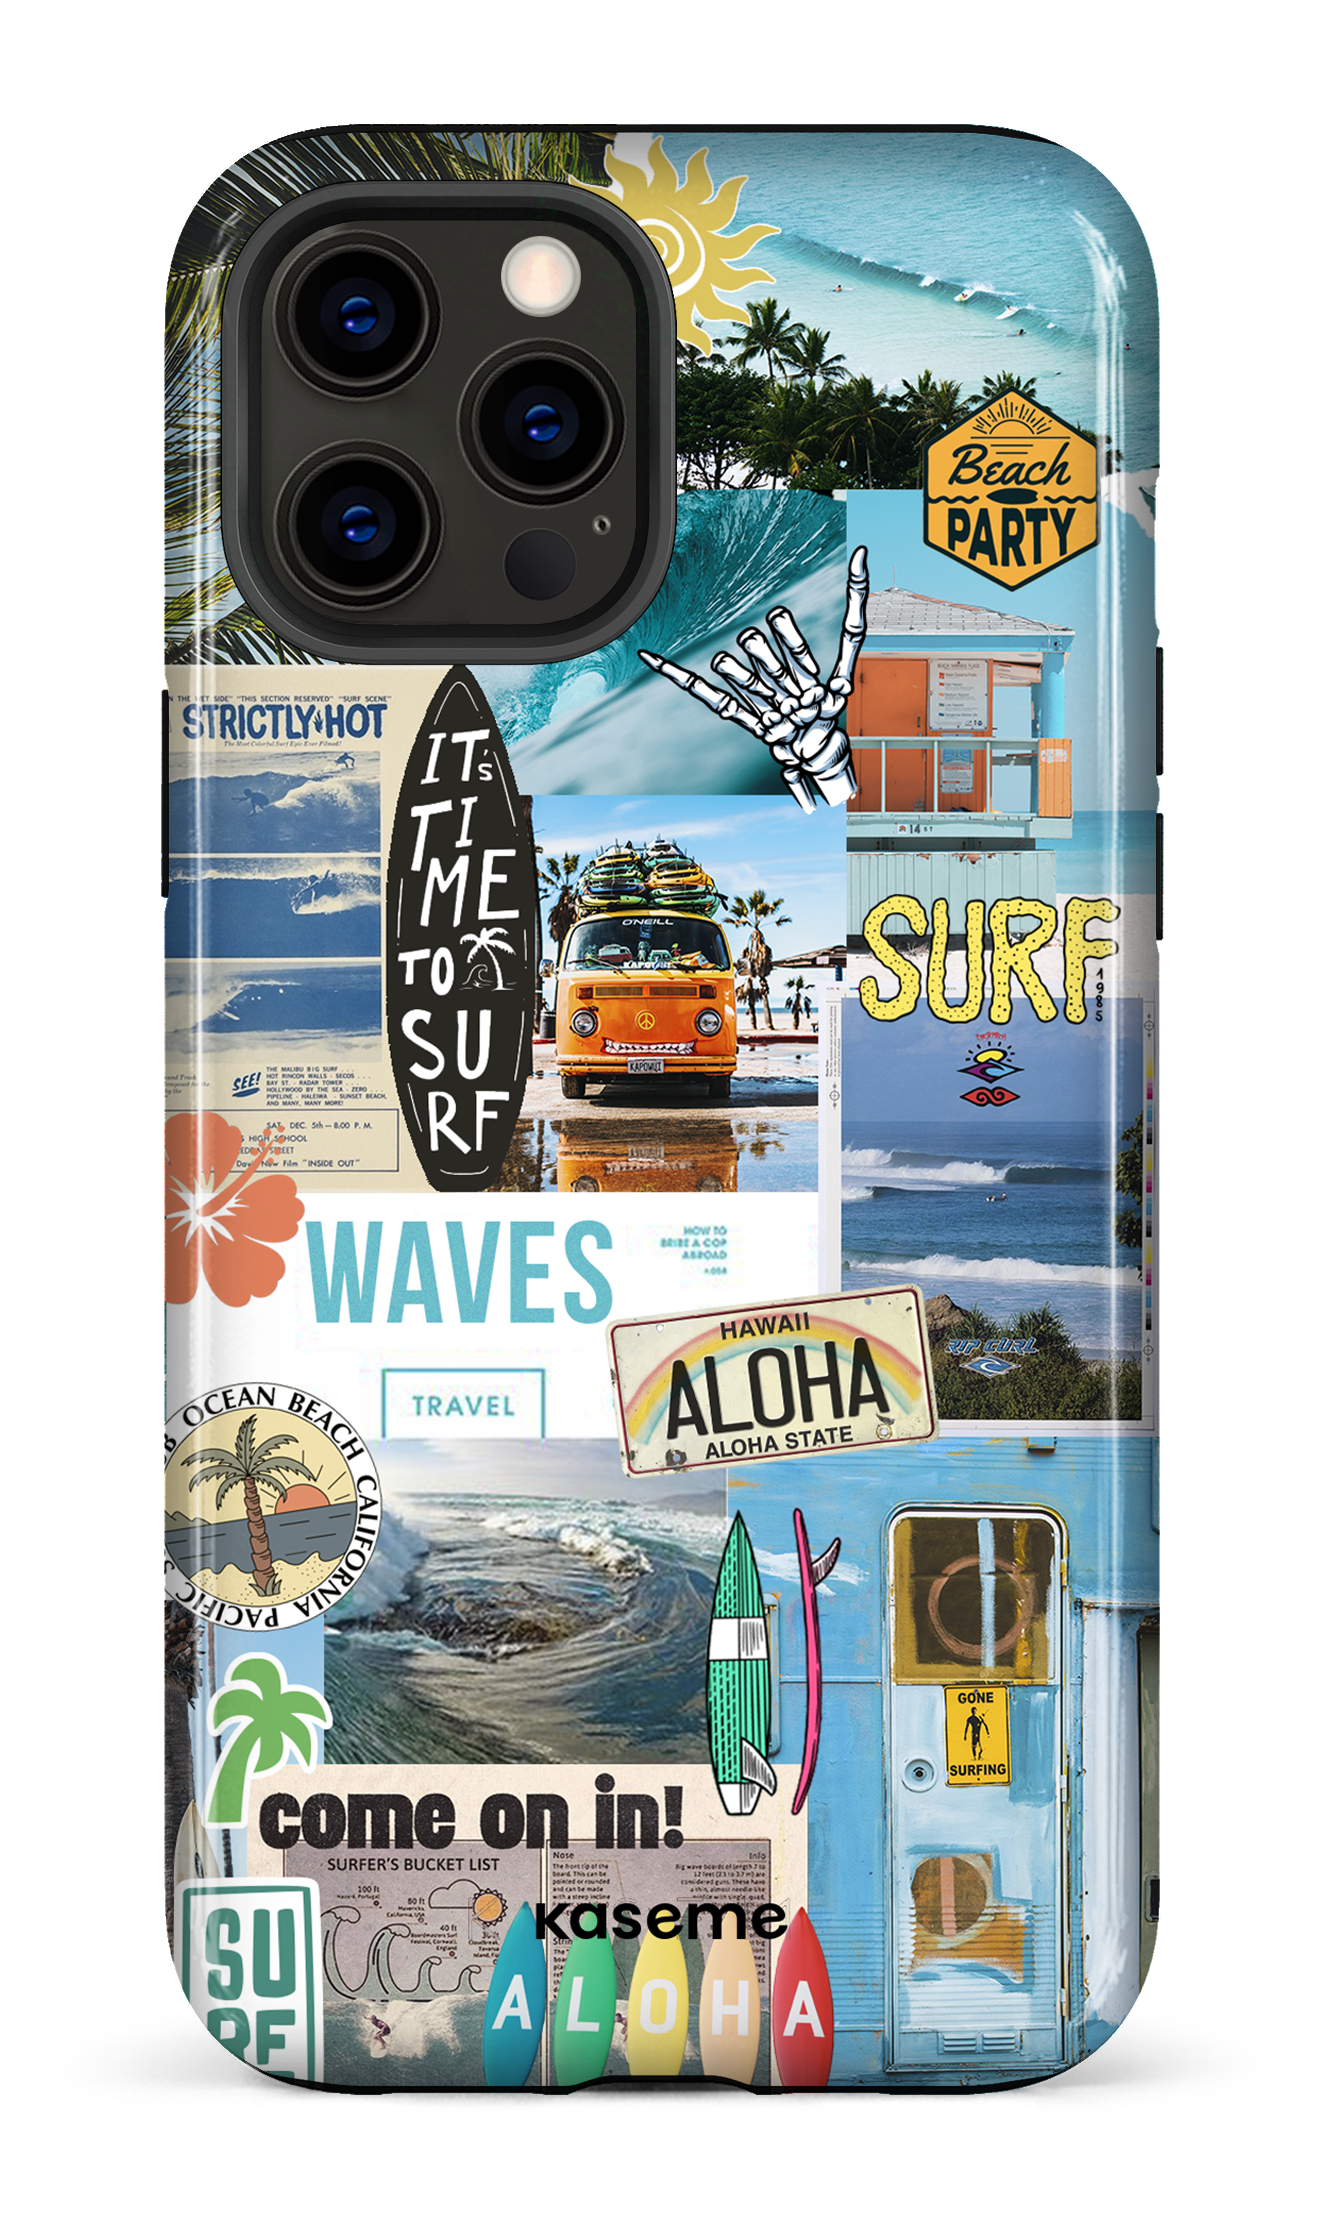 Aloha - iPhone 12 Pro Max